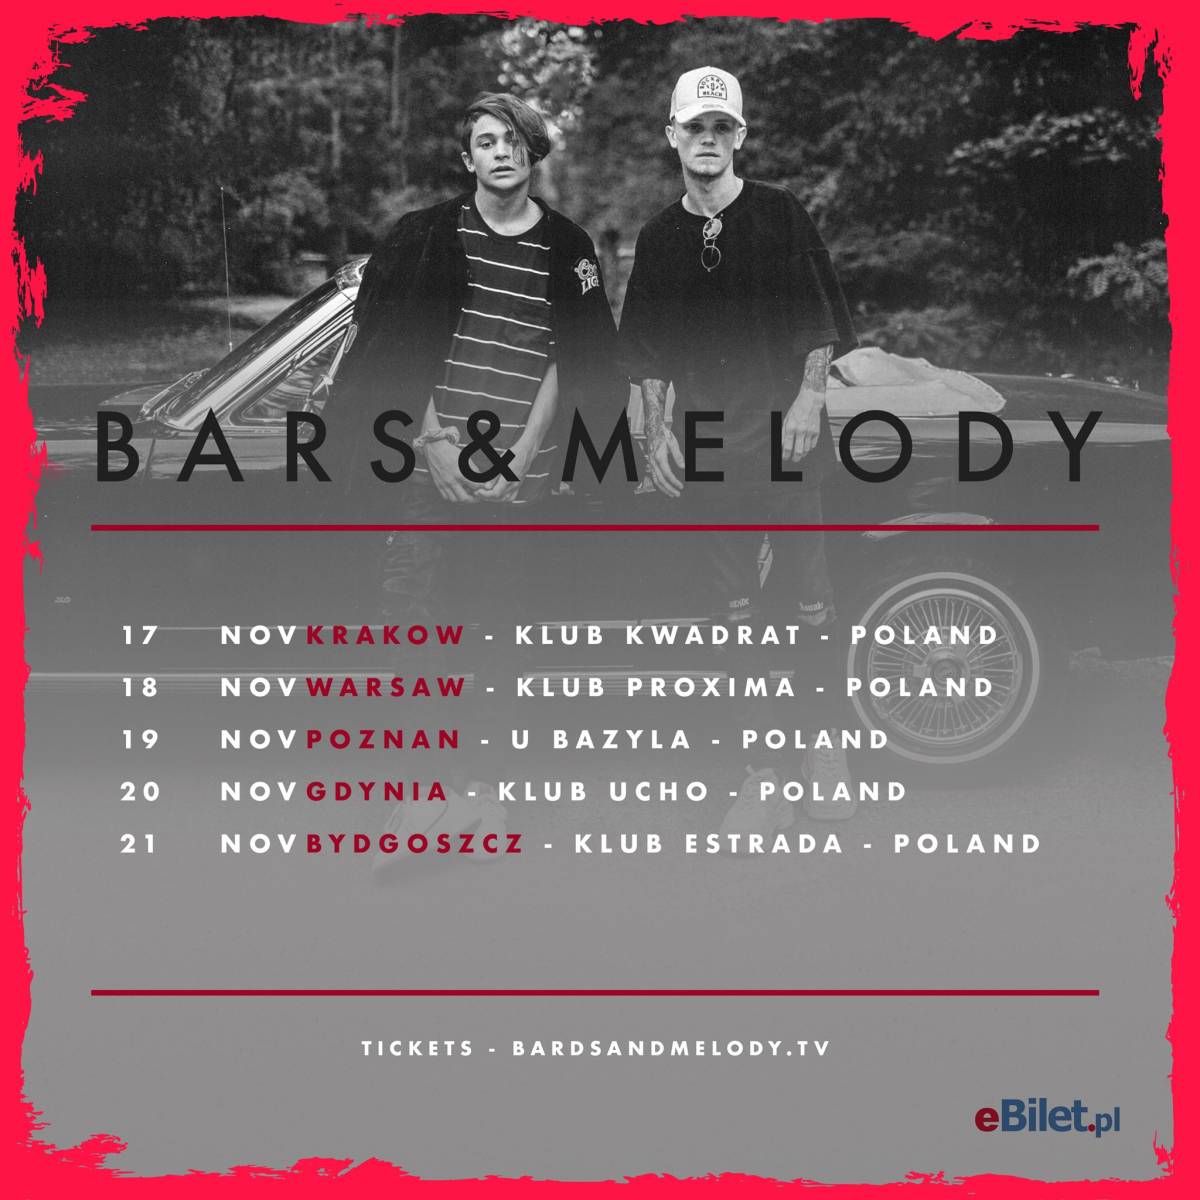 Bars & Melody - Sadboi Tour